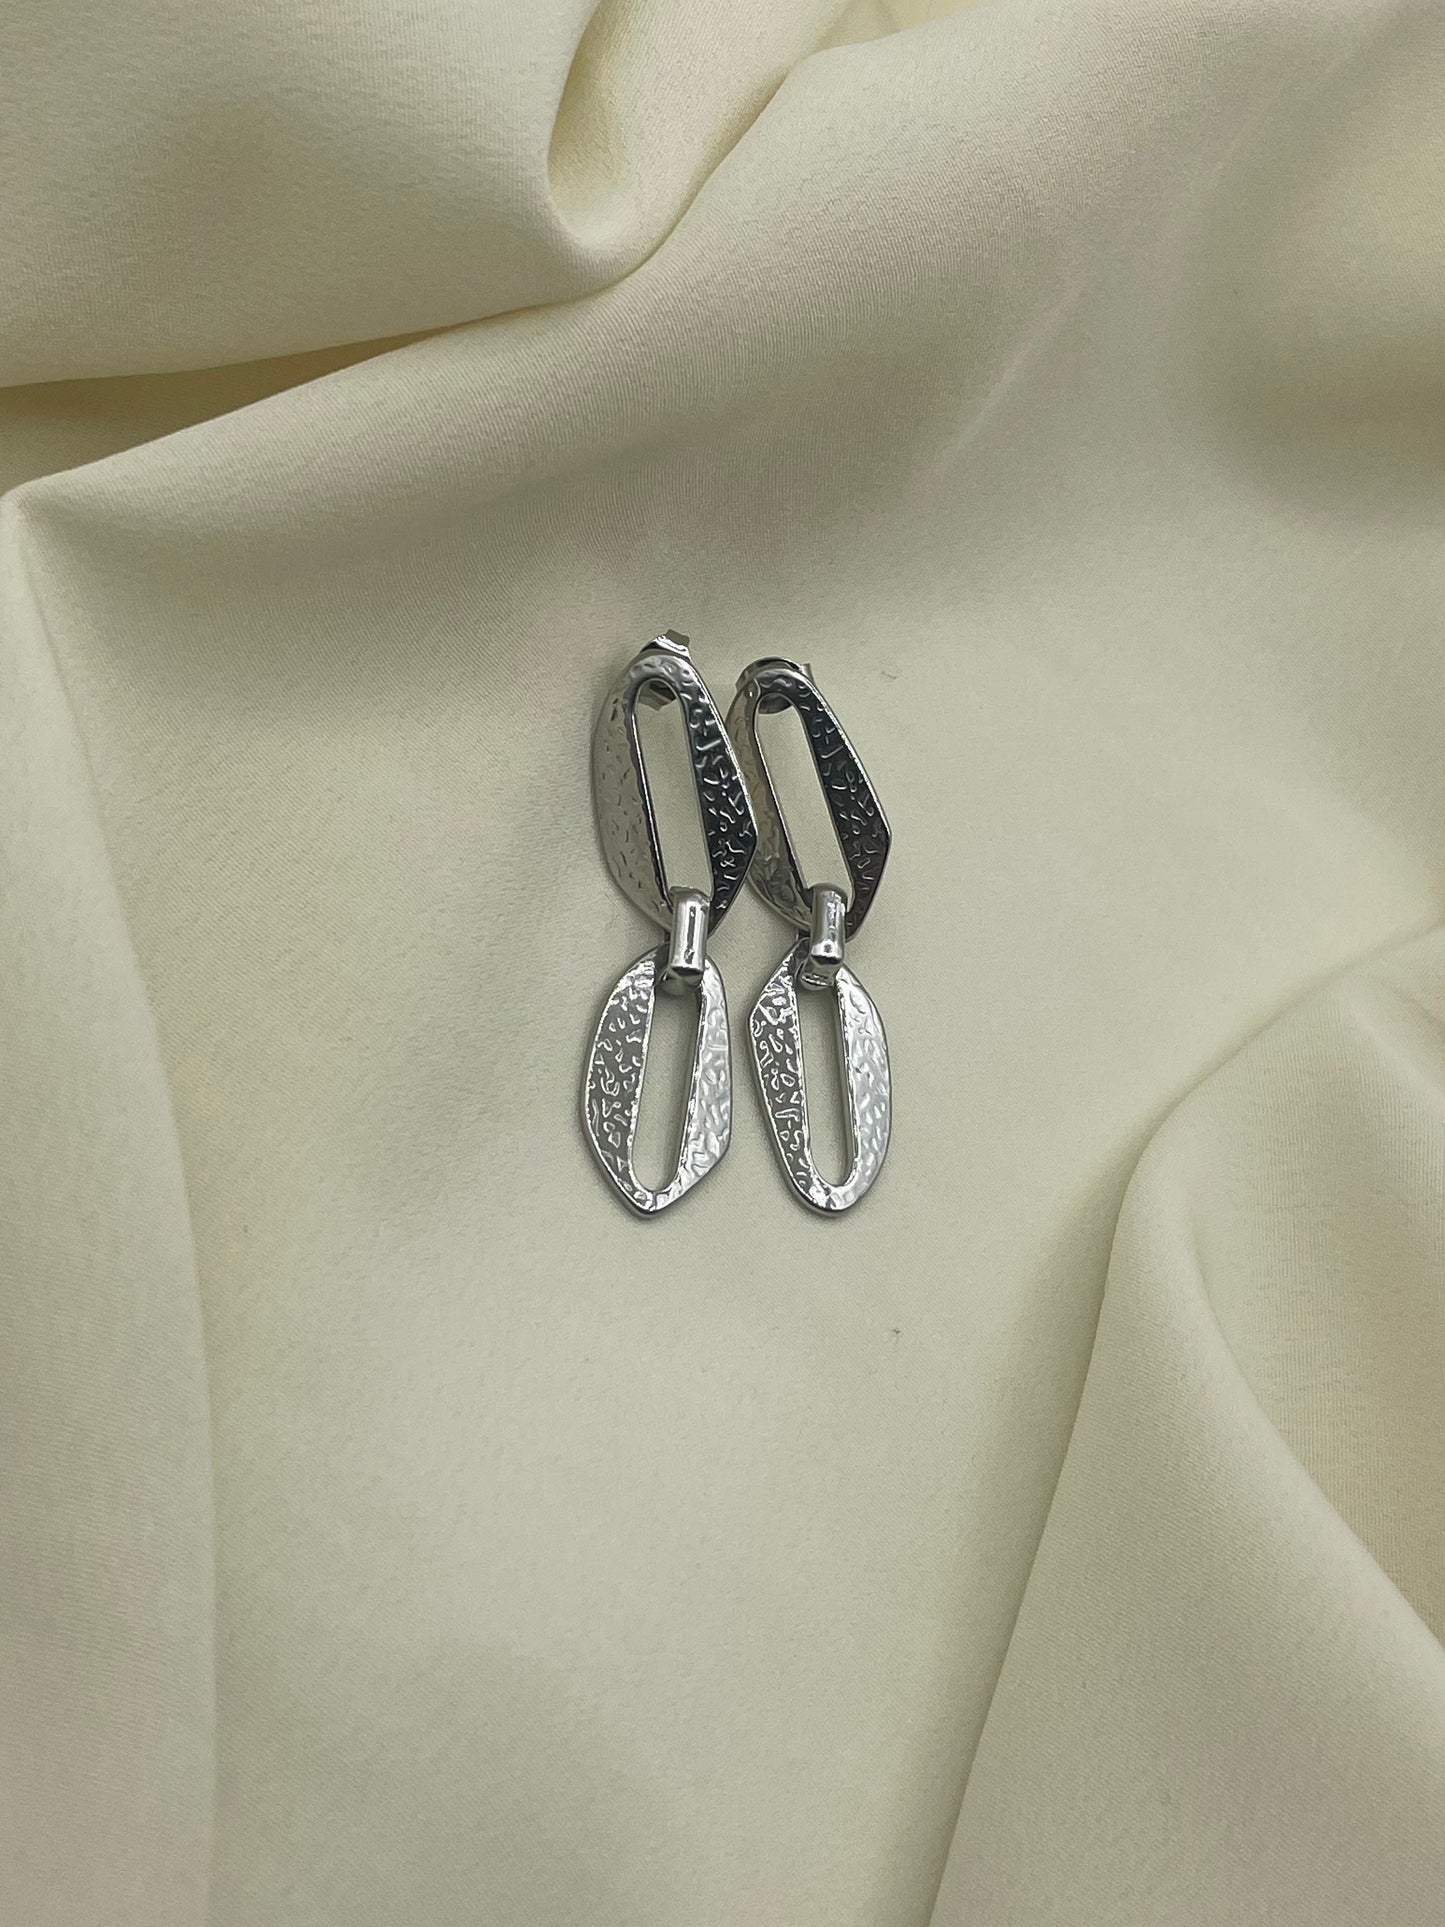 Hammered Pendant Earrings Silver